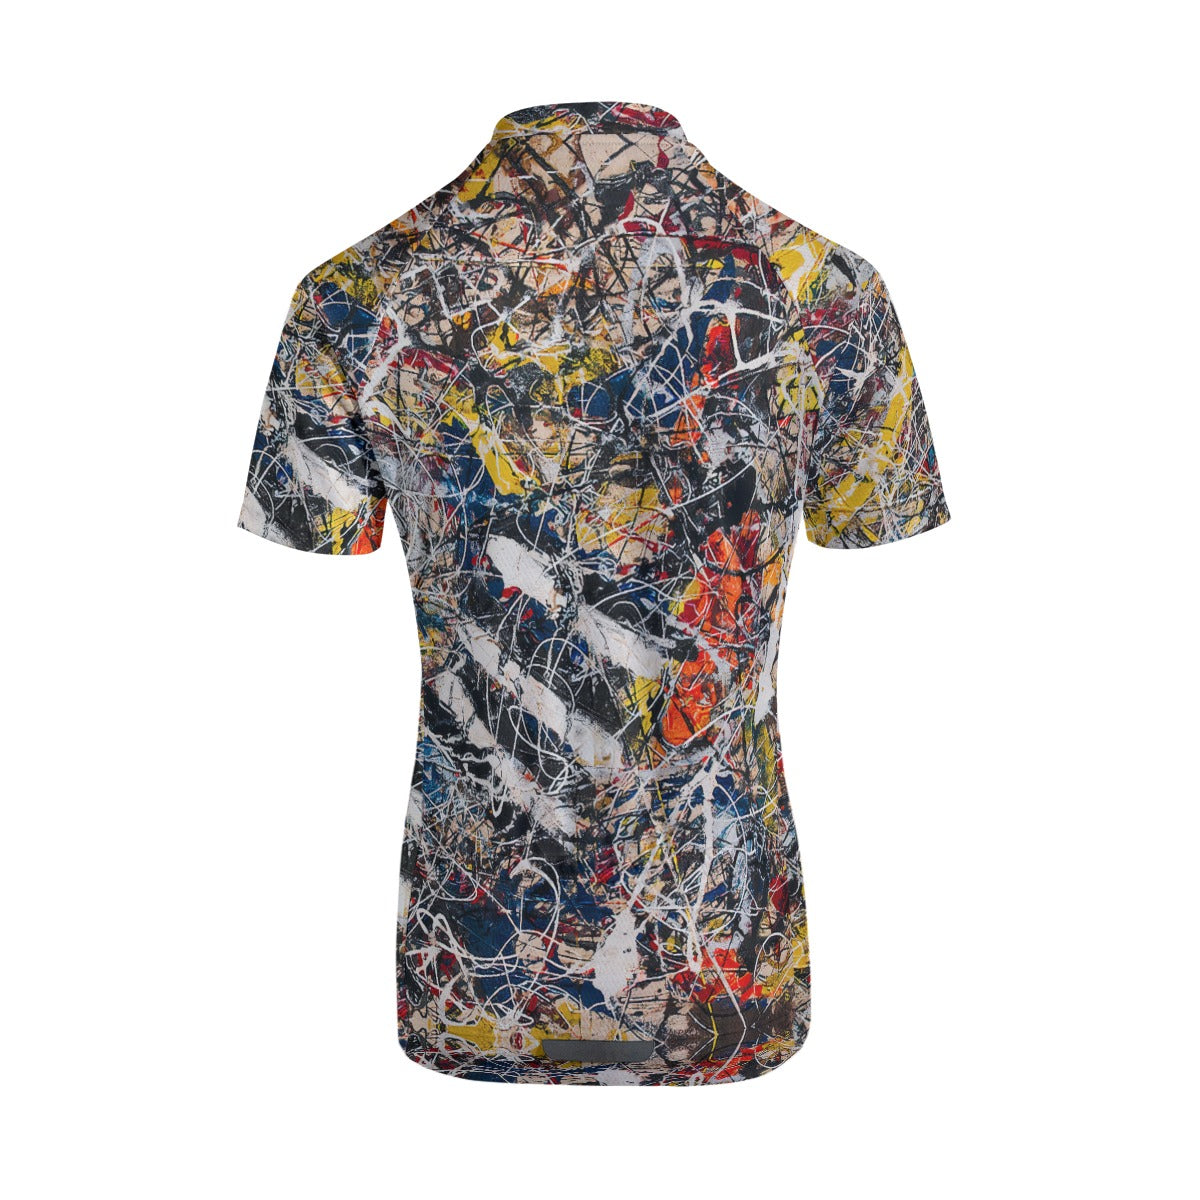 Artistic bike shirt inspired by Jackson Pollock